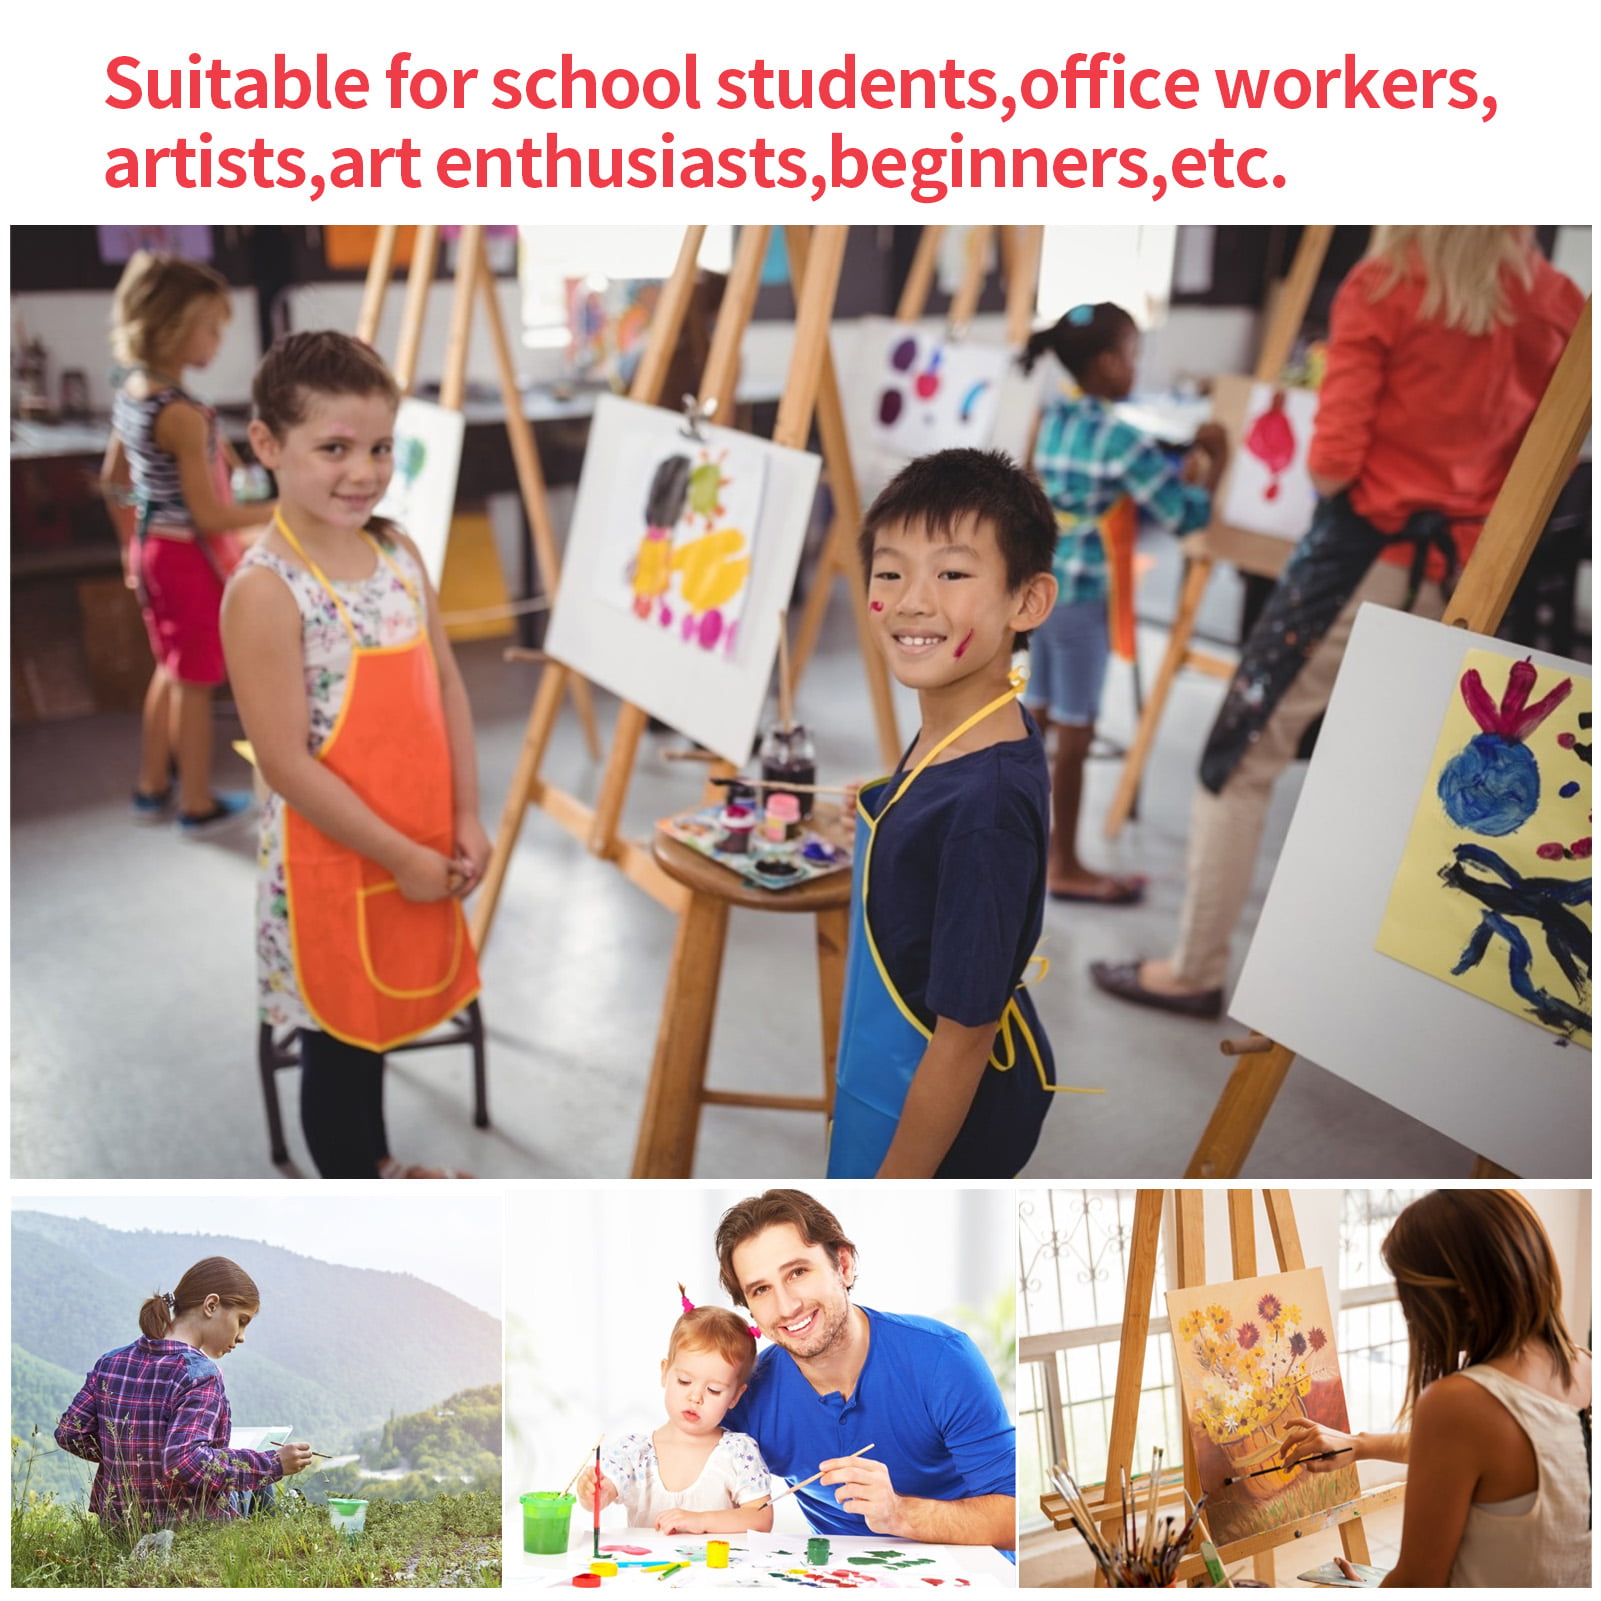 Eccomum 39Pcs Kids Art Paint Set, Acrylic Painting Supplies Kit with 24 Non  Toxic Paints, 6 Paint Brushes, 6 Canvas, Easel, Palette, Smock, Storage Bag  